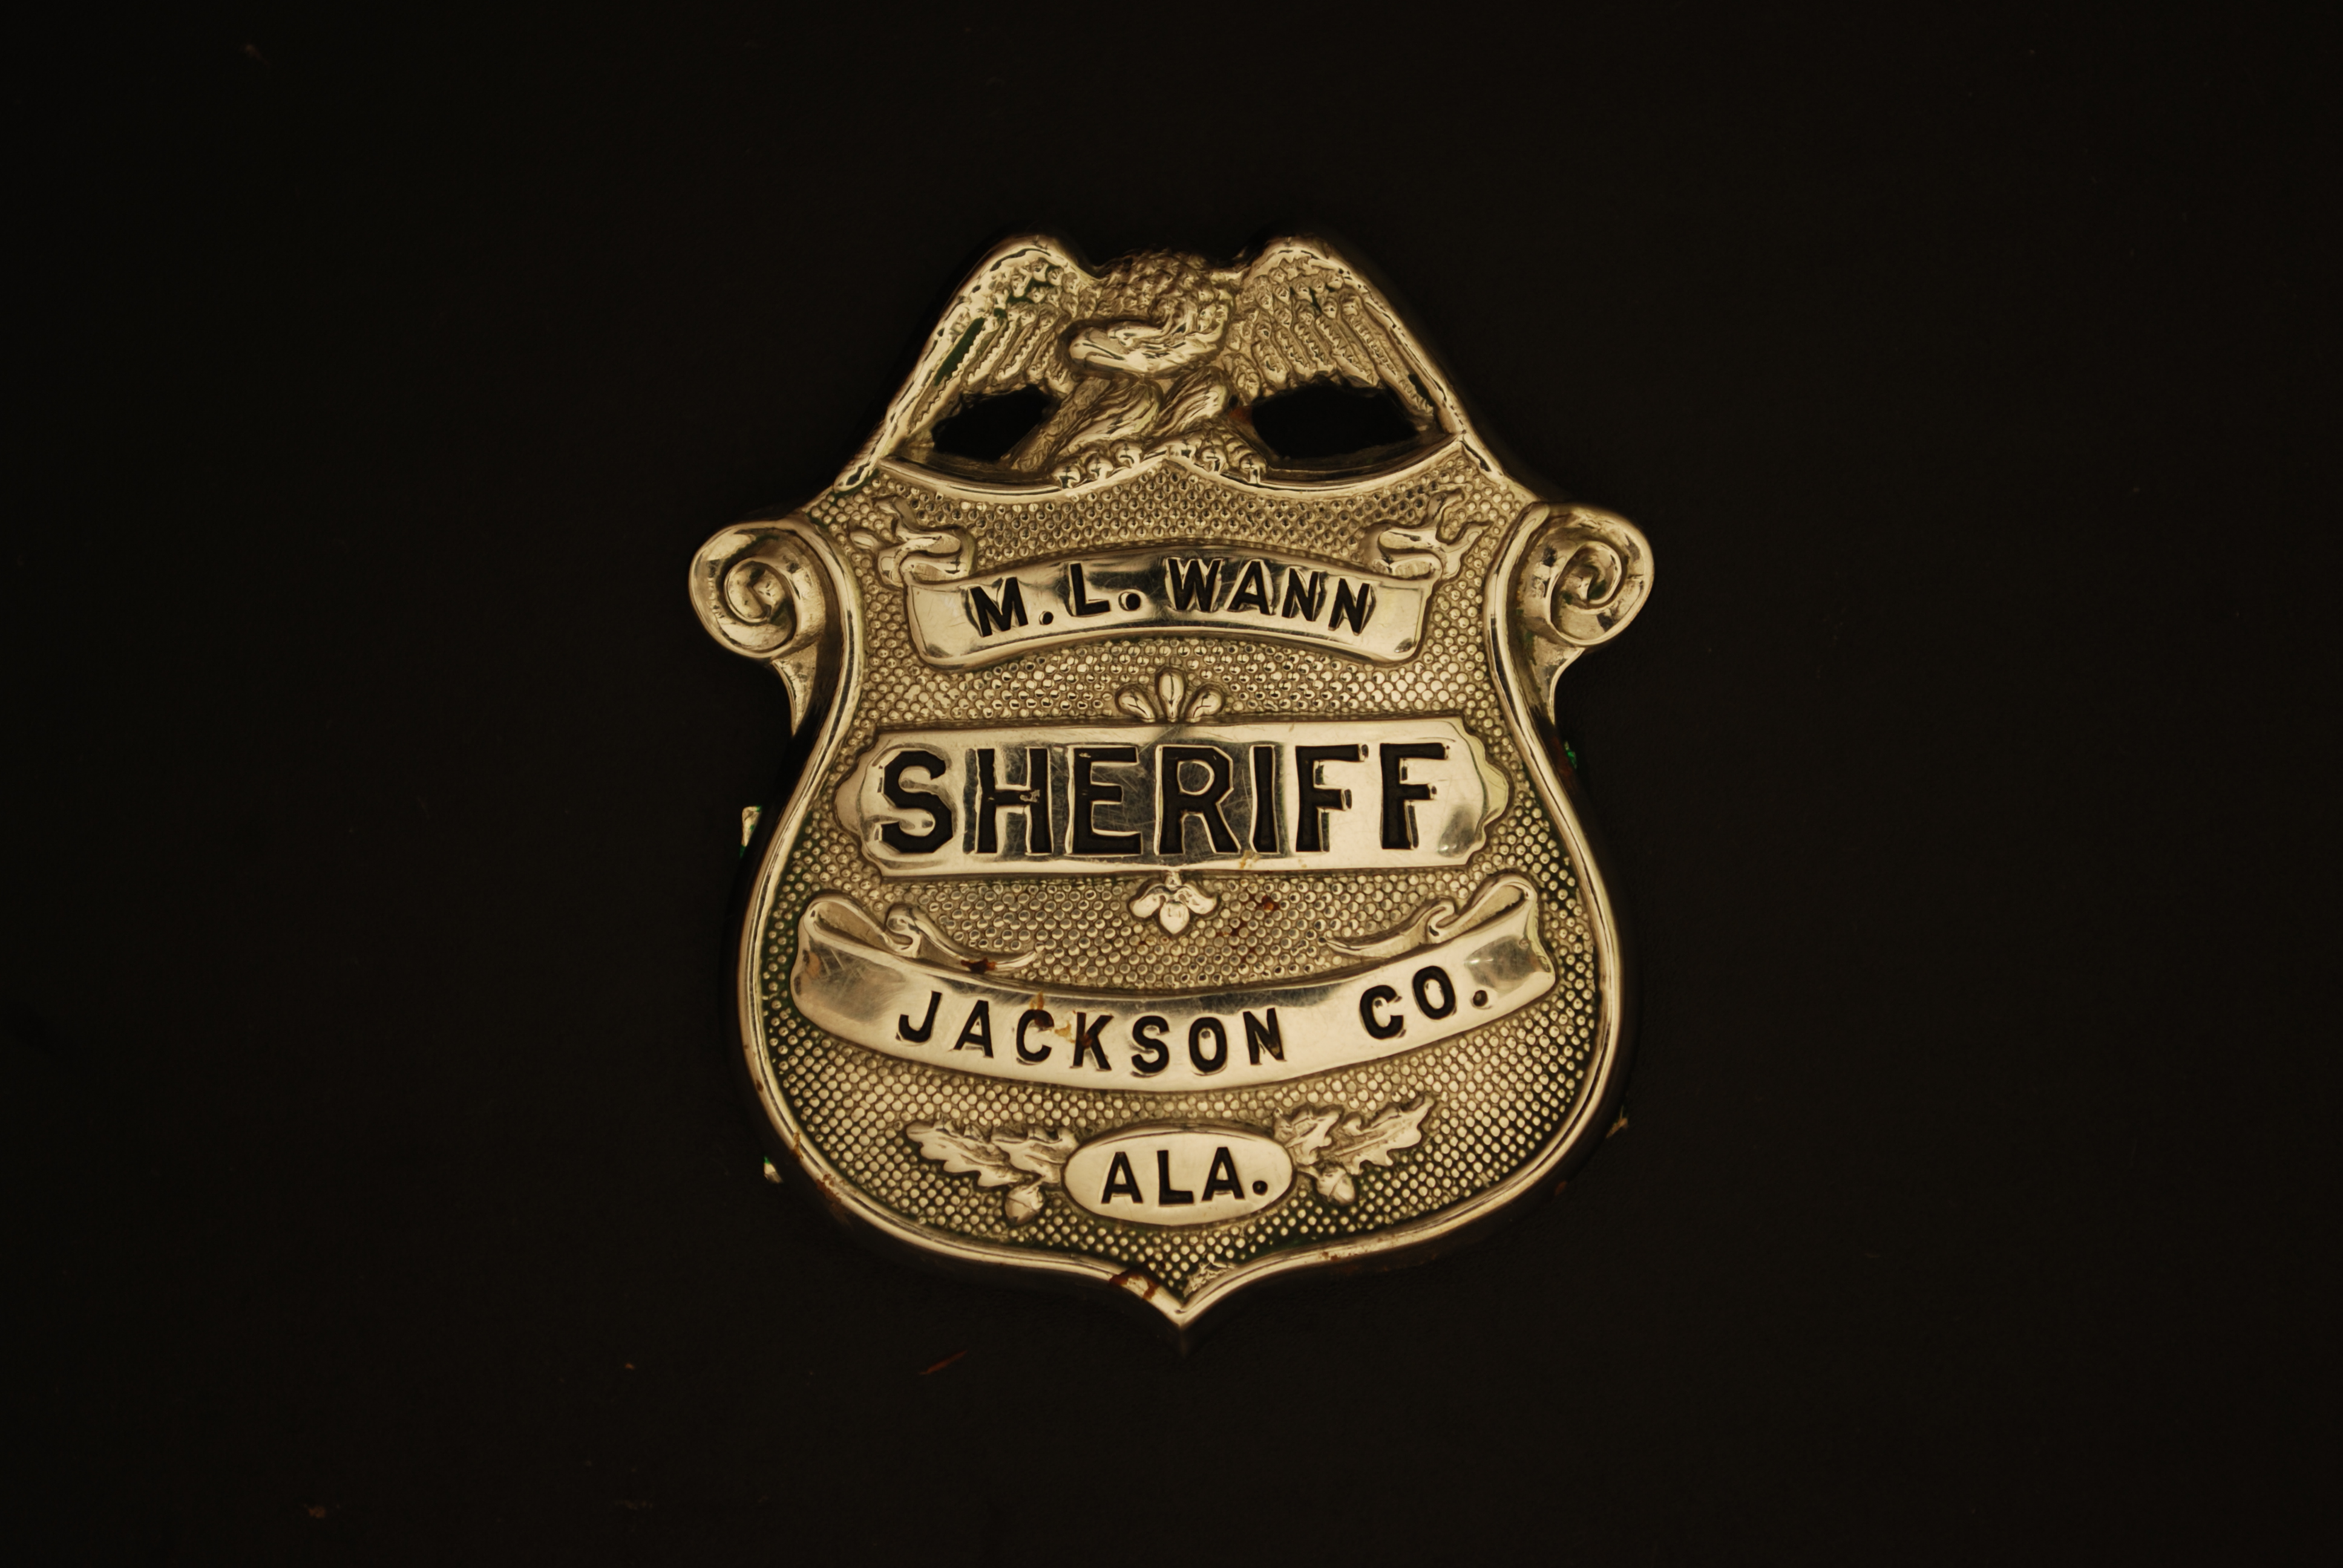 Sheriff Matthew L. Wann | Jackson County Sheriff's Office, Alabama